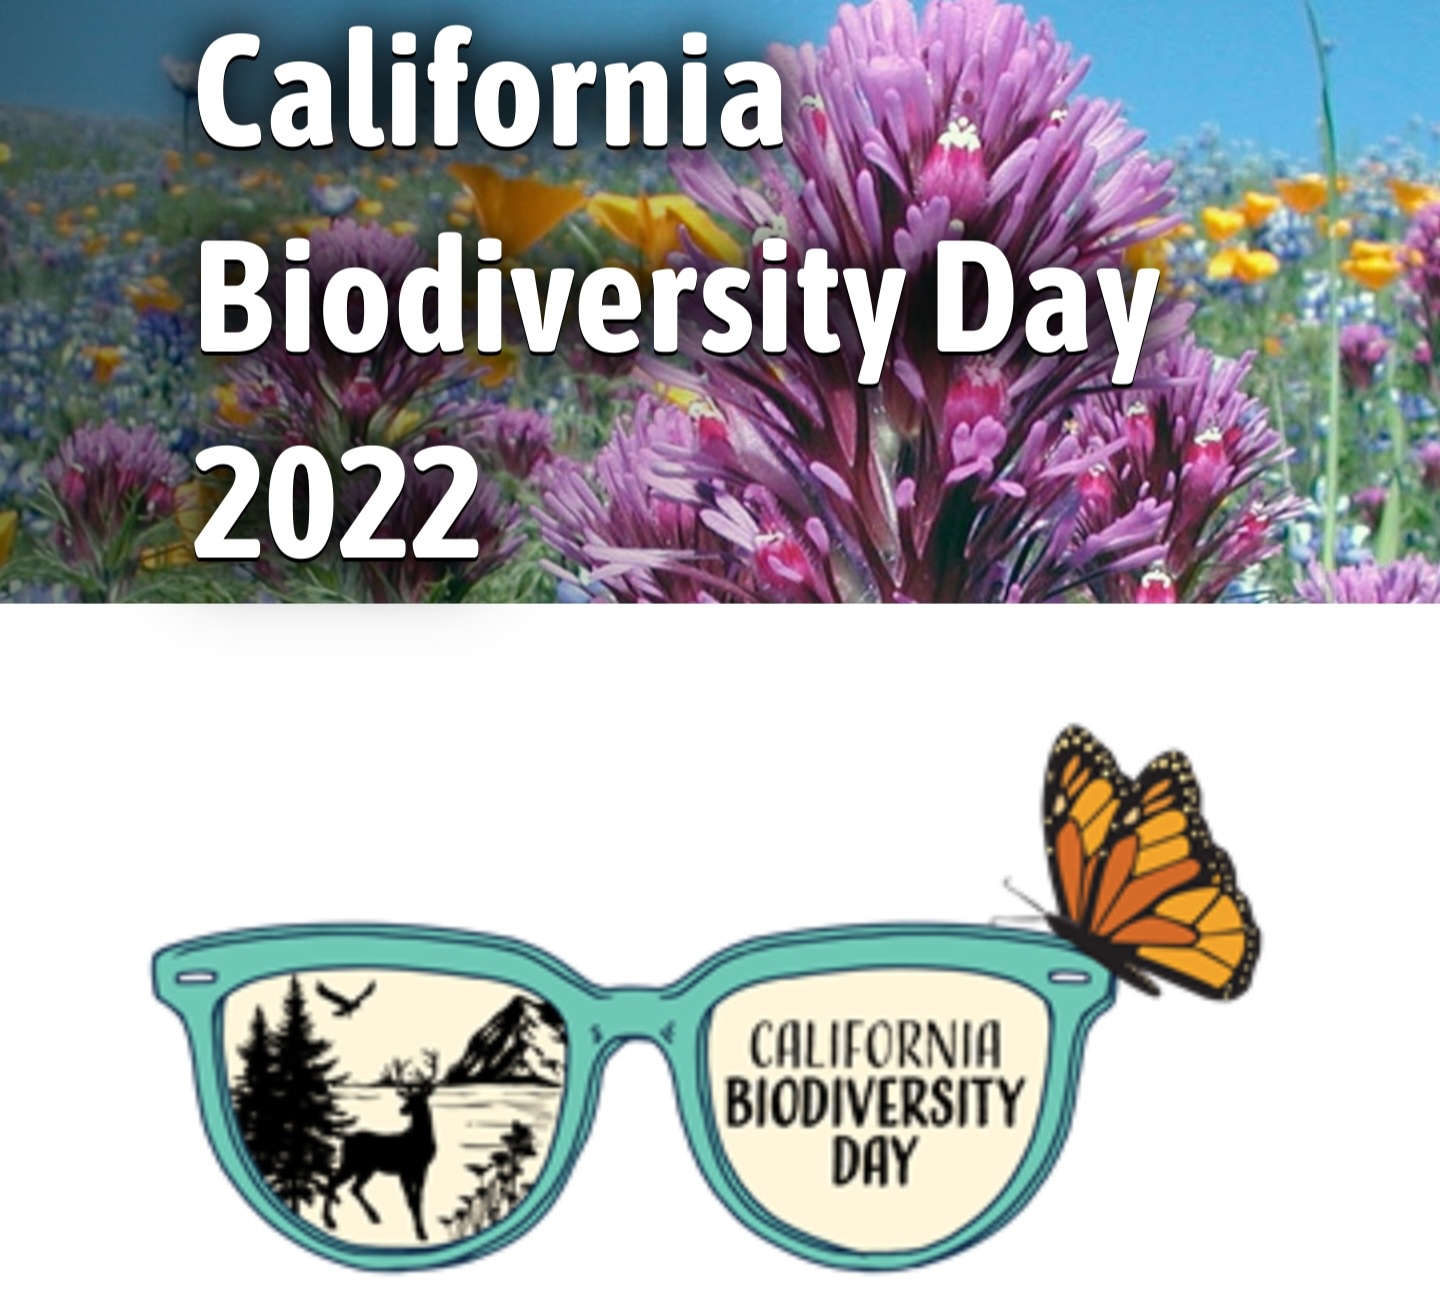 California Biodiversity Day 2022